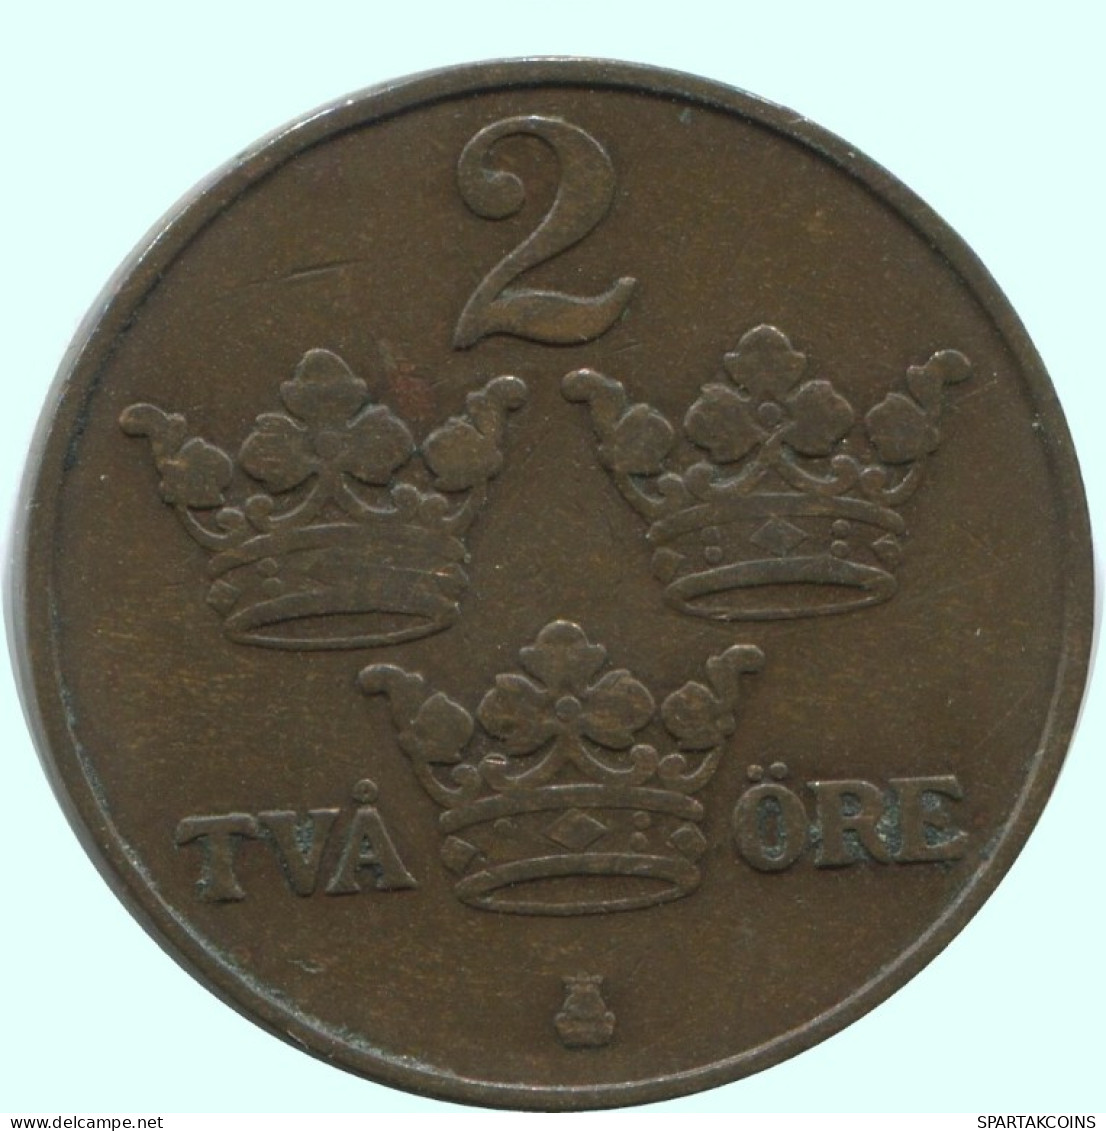 2 ORE 1912 SUECIA SWEDEN Moneda #AC826.2.E.A - Sweden